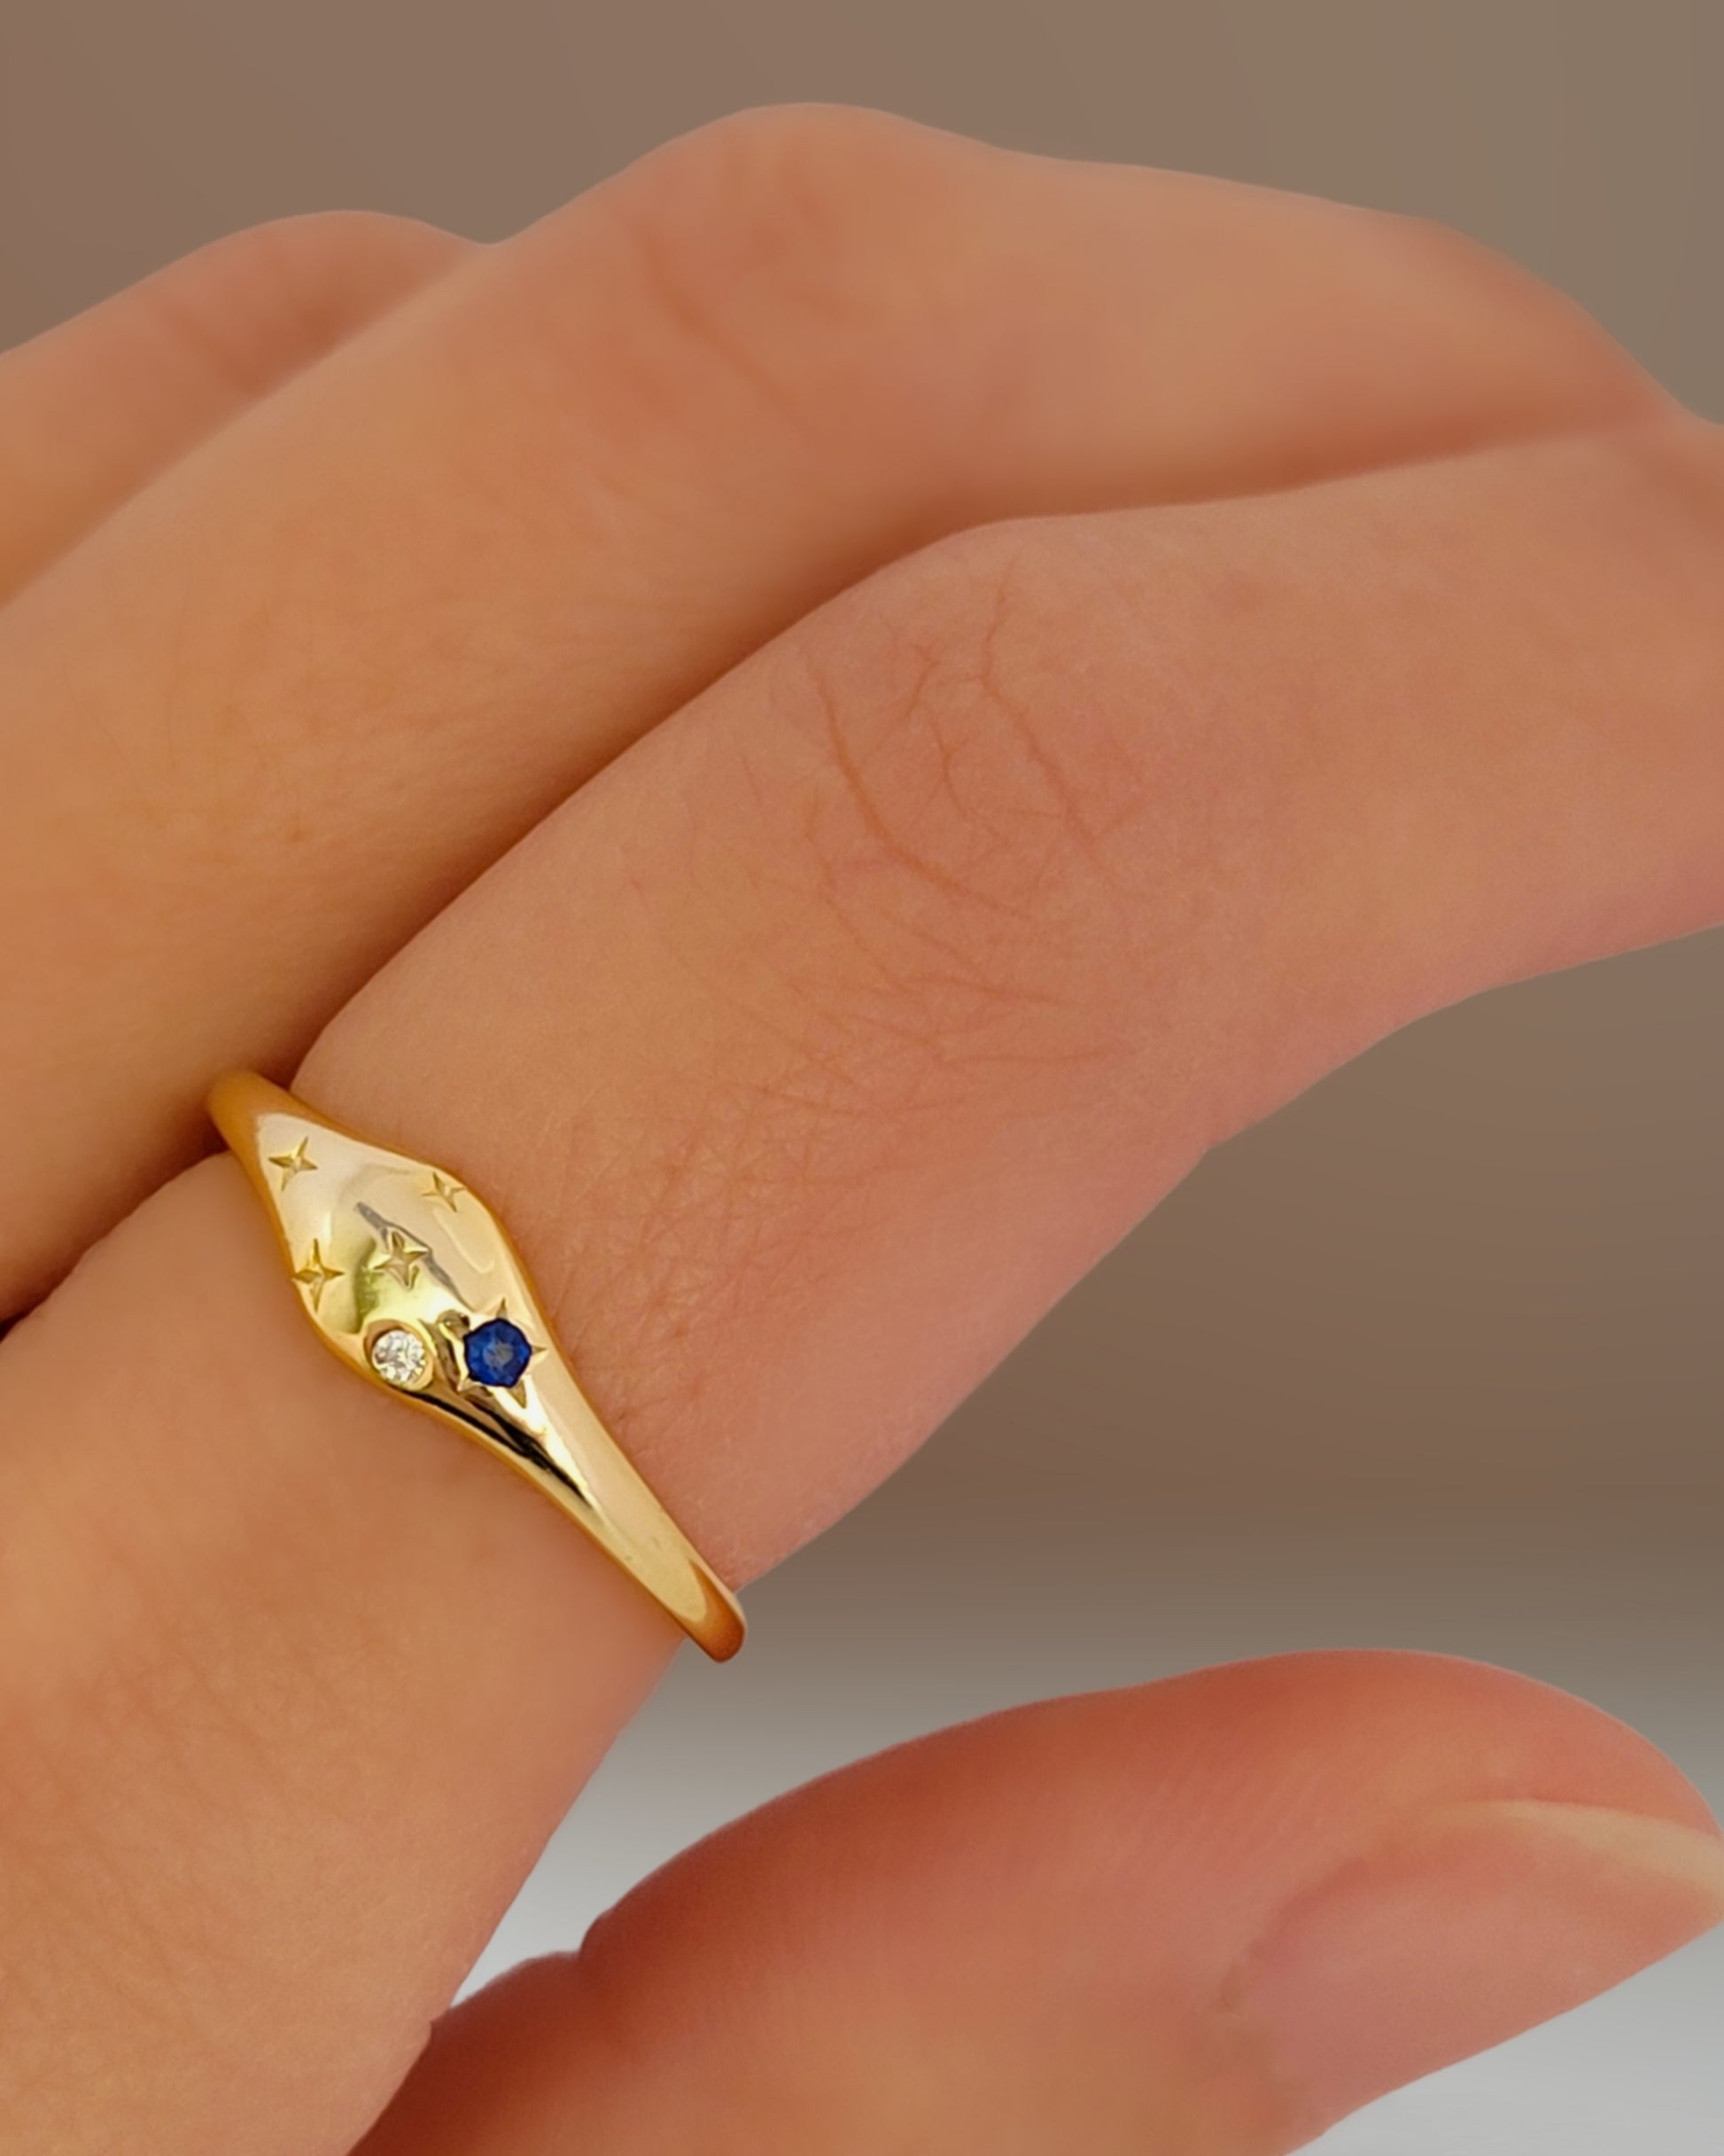 Virgo jewellery constellation ring with zodiac stone